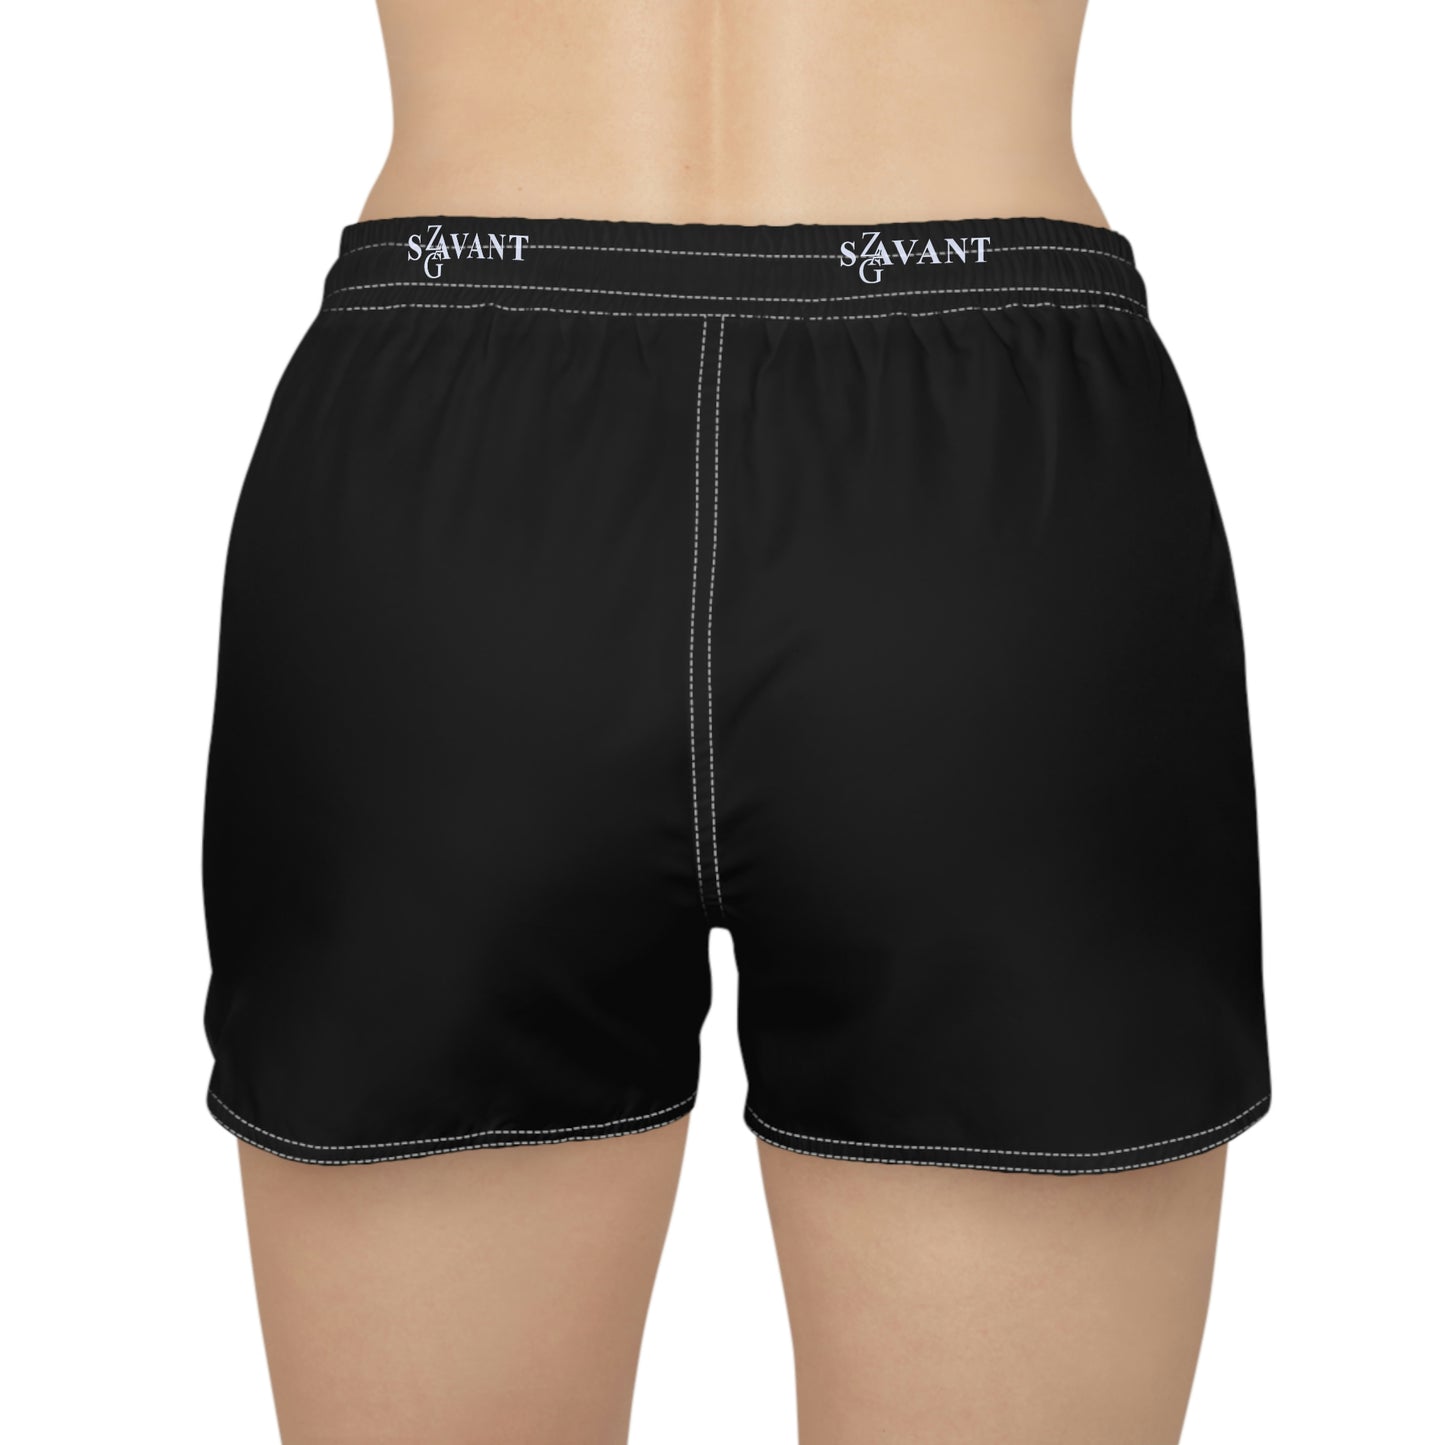 Women's casual drawstring shorts - Black